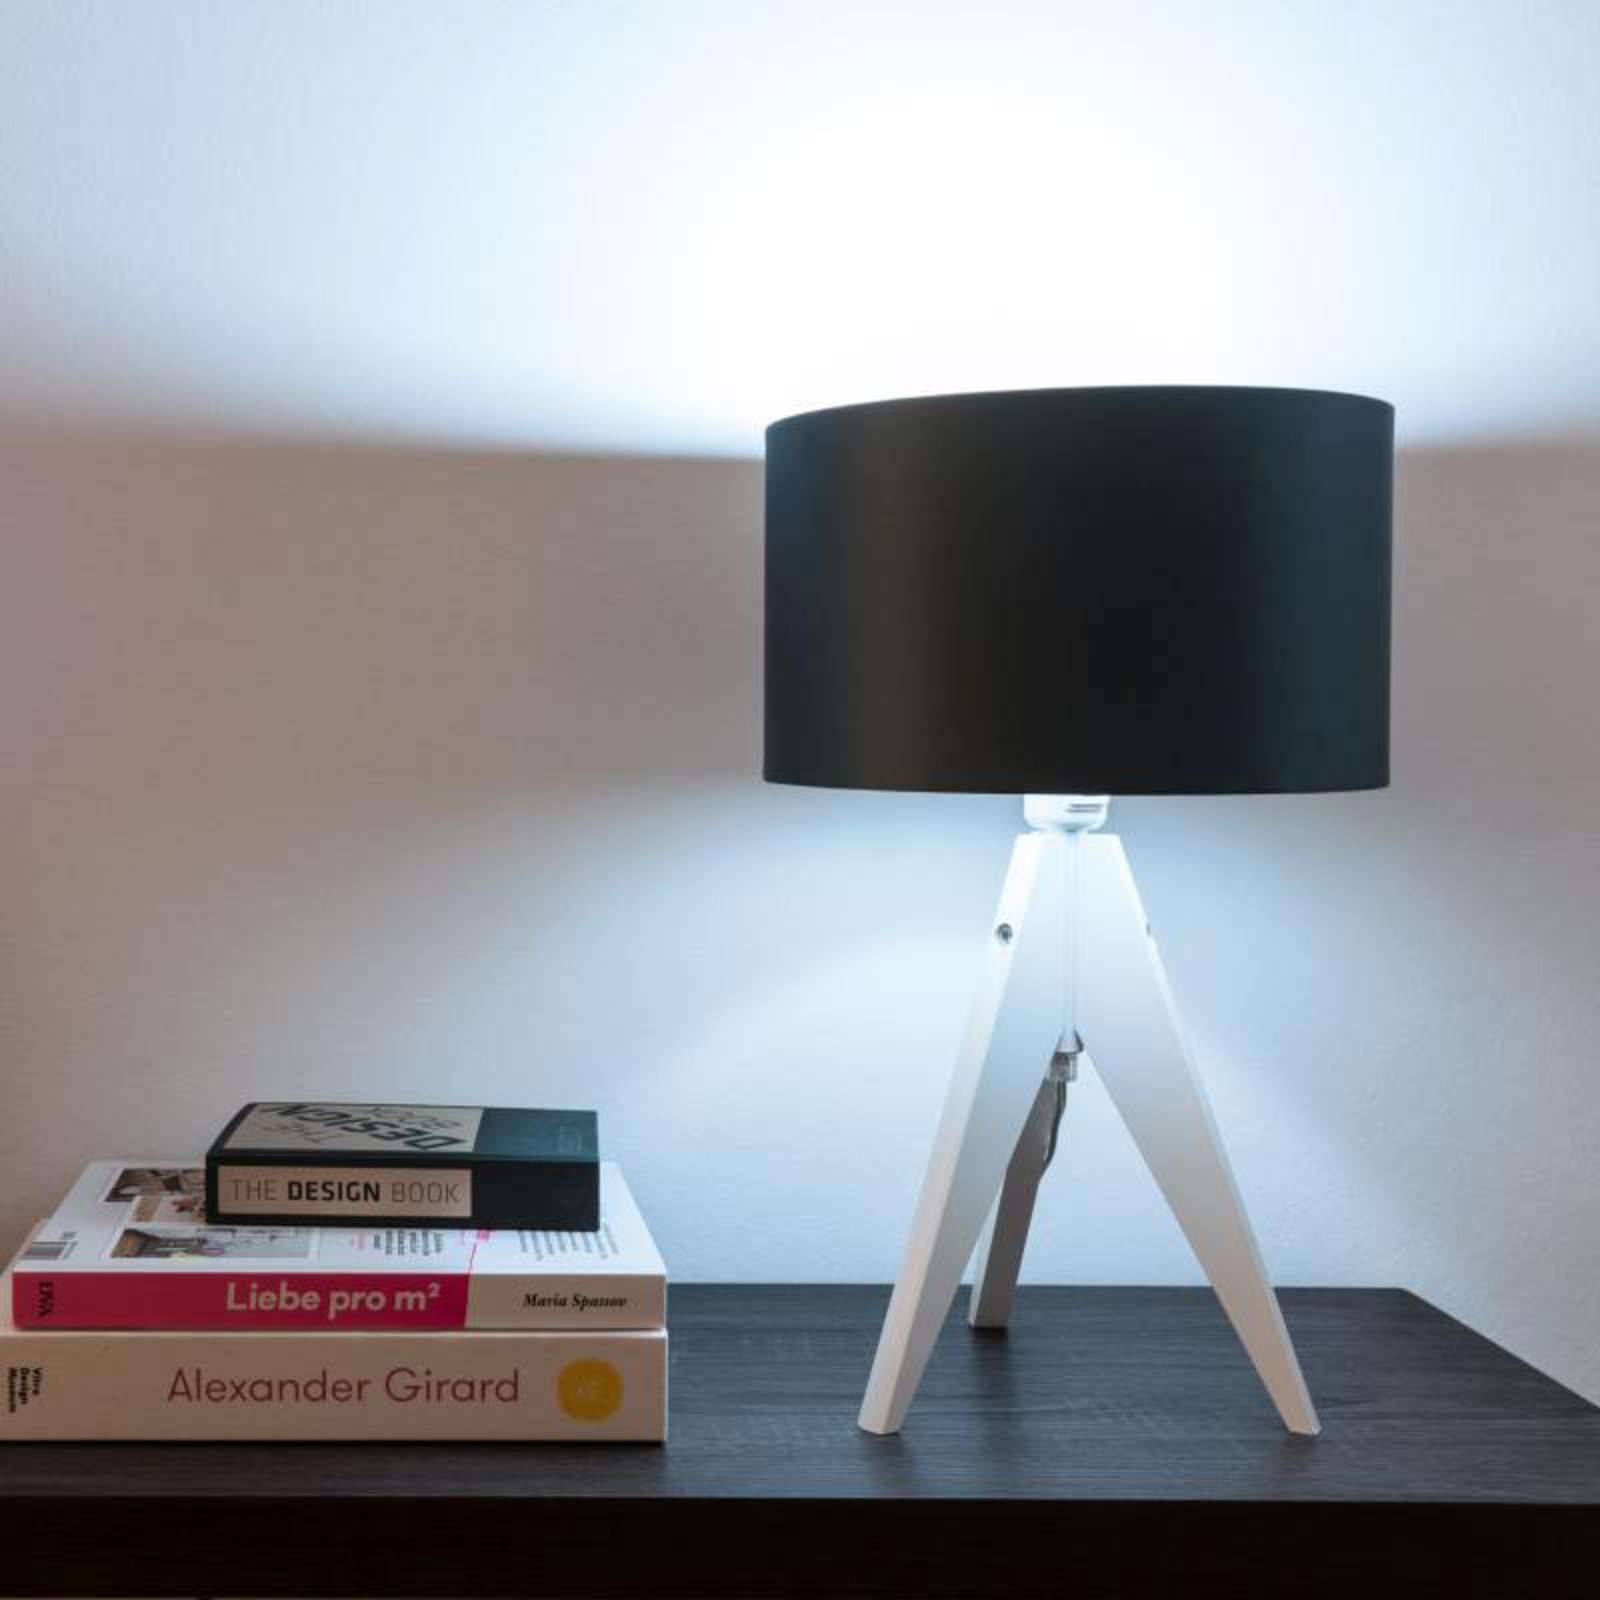 Müller Licht tint white -LED-lamppu E27 9W, CCT